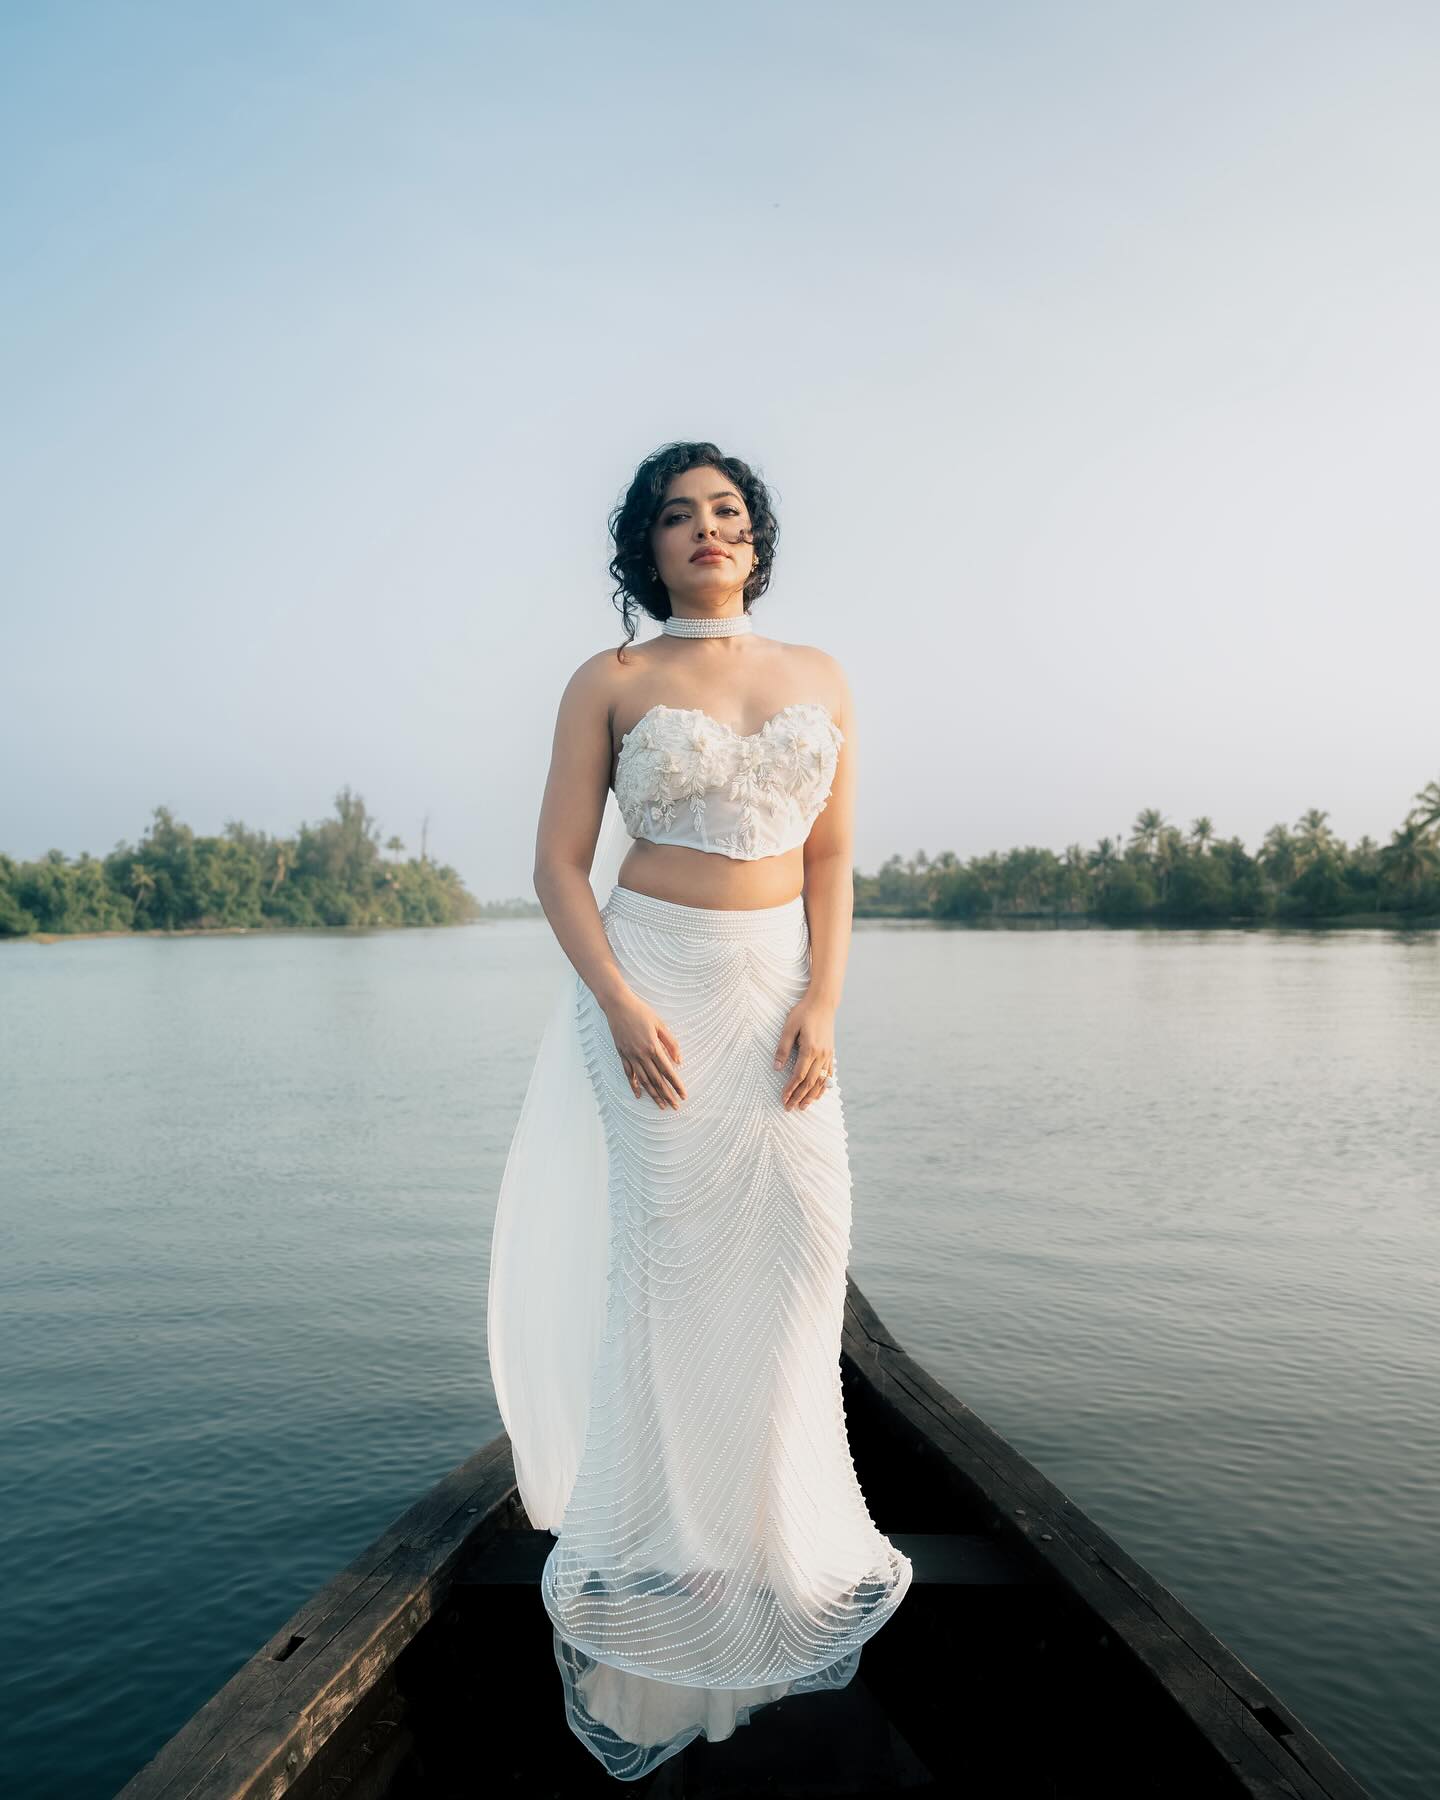 rima-kallingal-latest-photos-in-handcrafted-white-bridal-dress-by-Salt-Studio